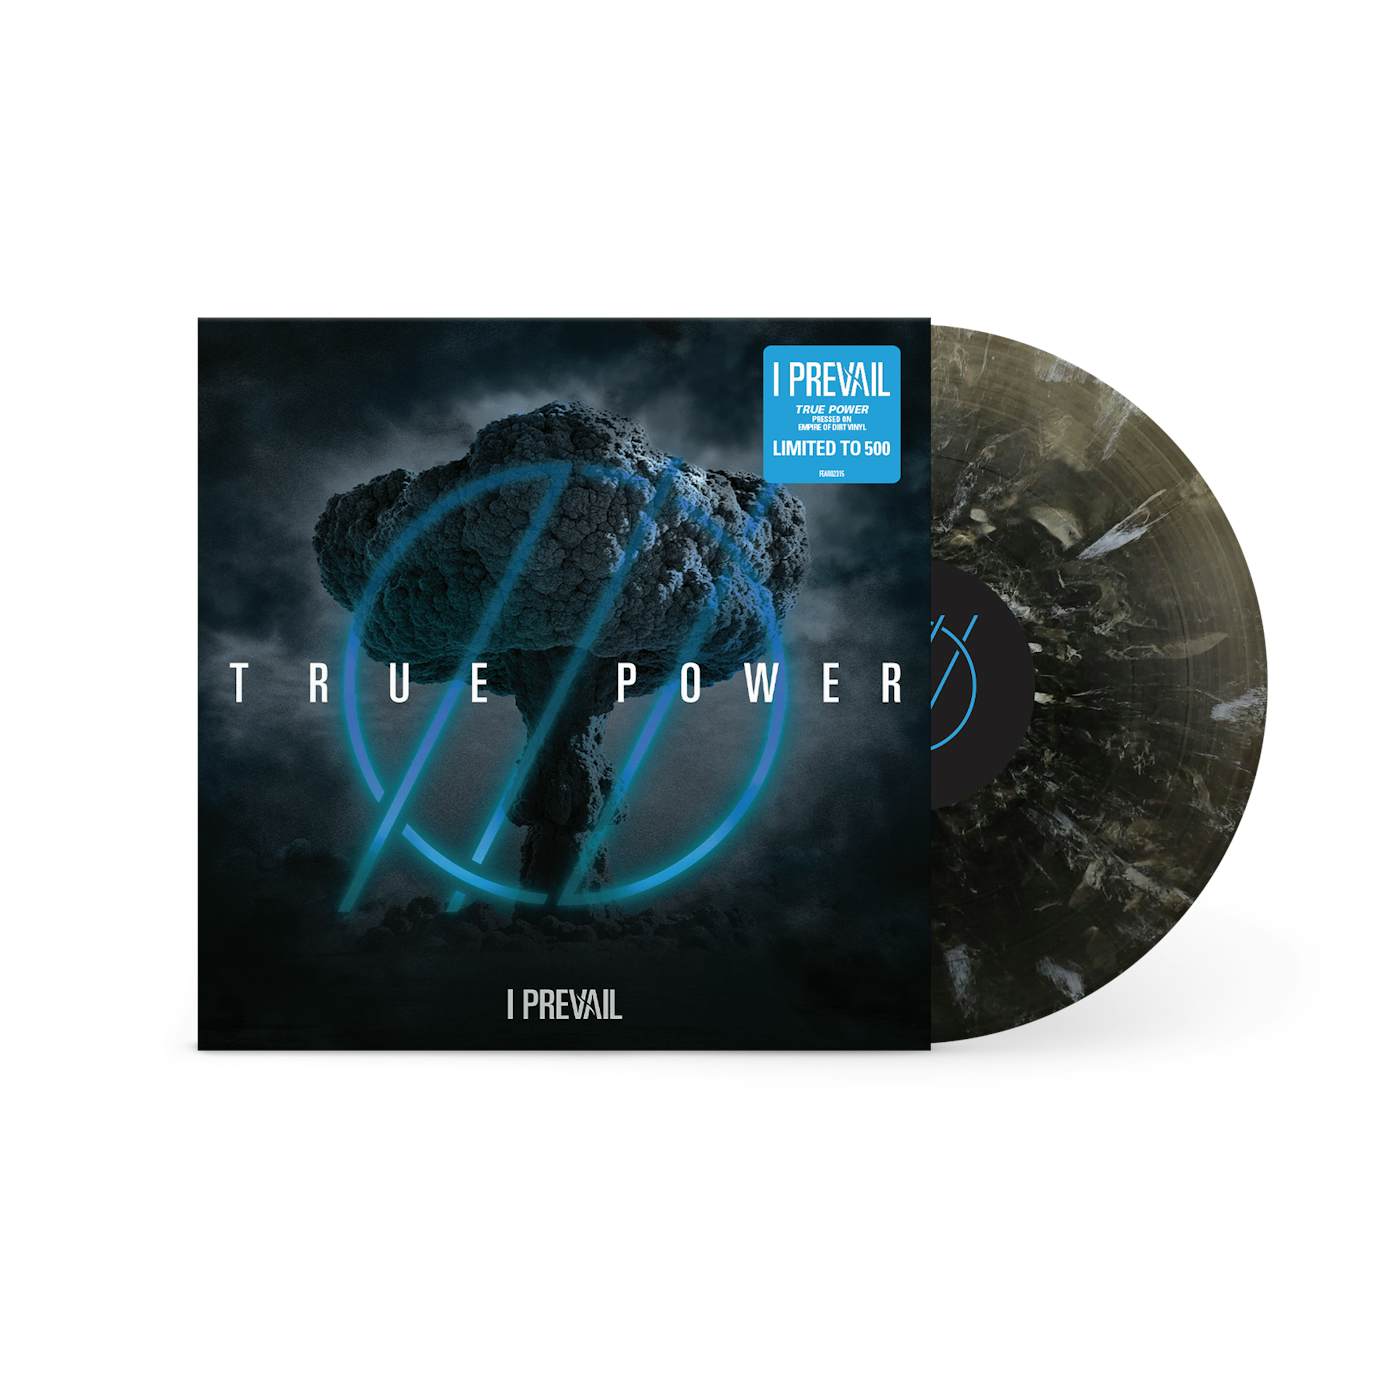 I Prevail "TRUE POWER" Empire Of Dirt Vinyl